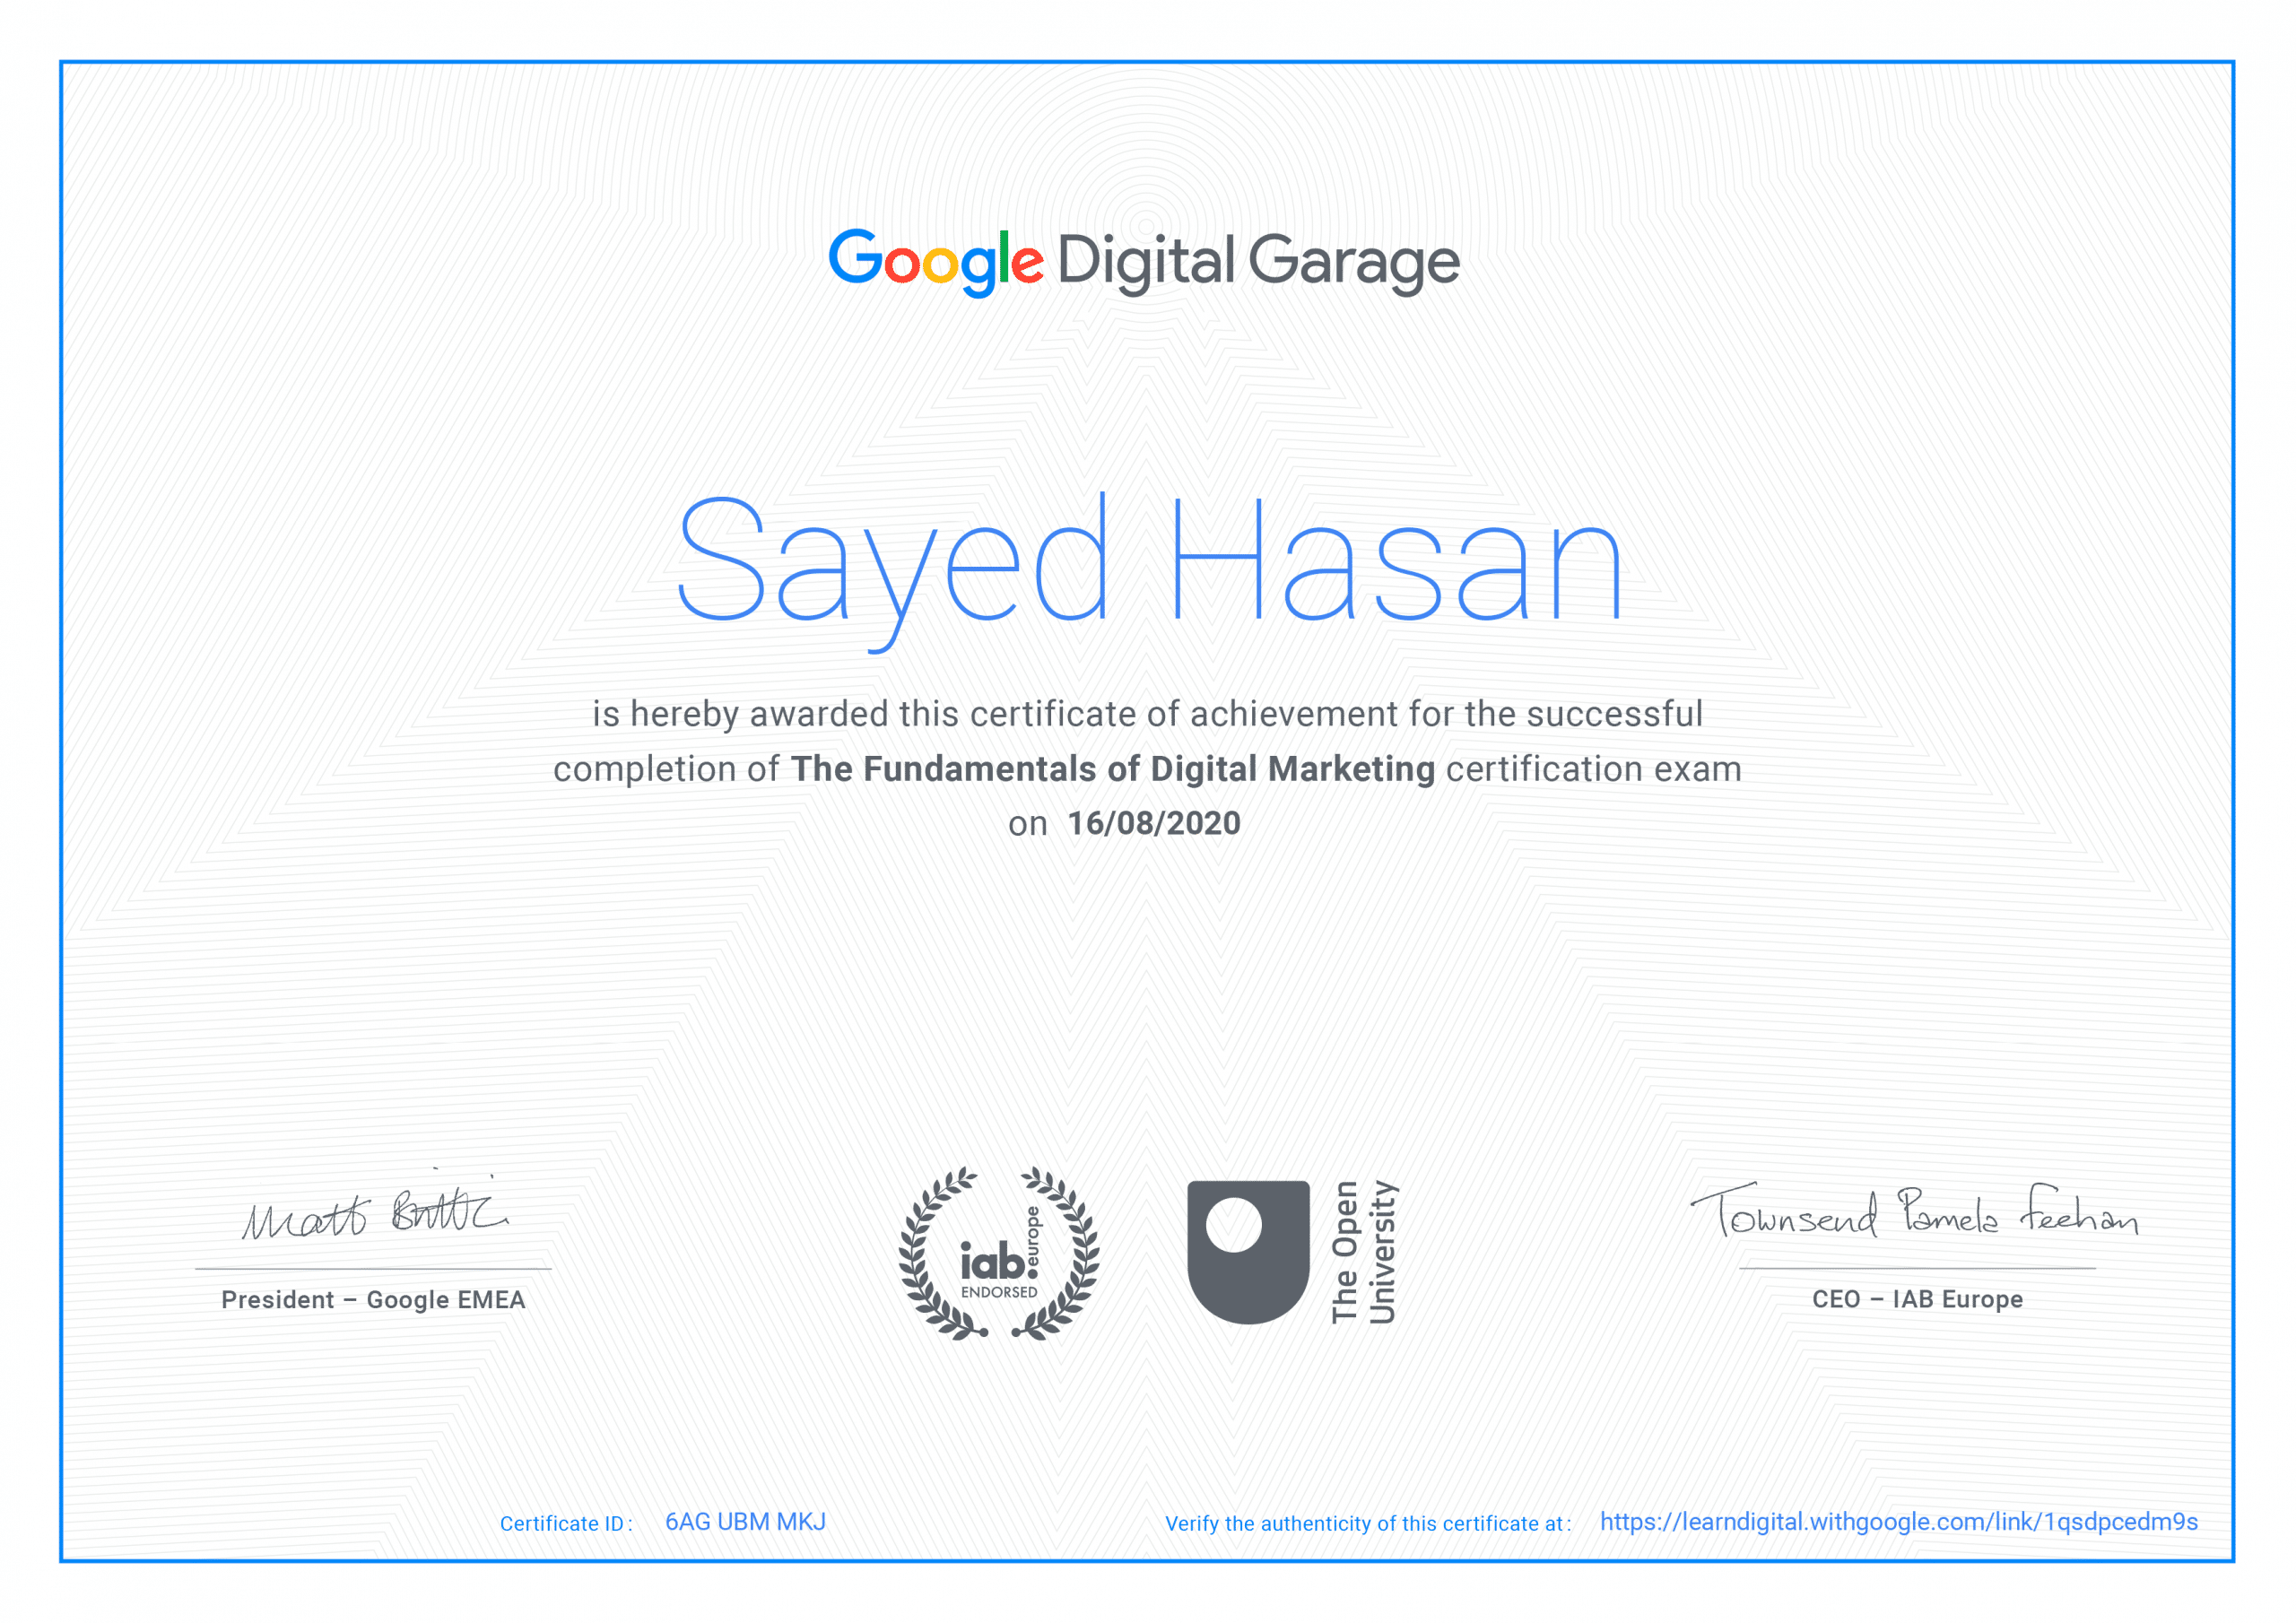 Sayed's certificate of digital marketing